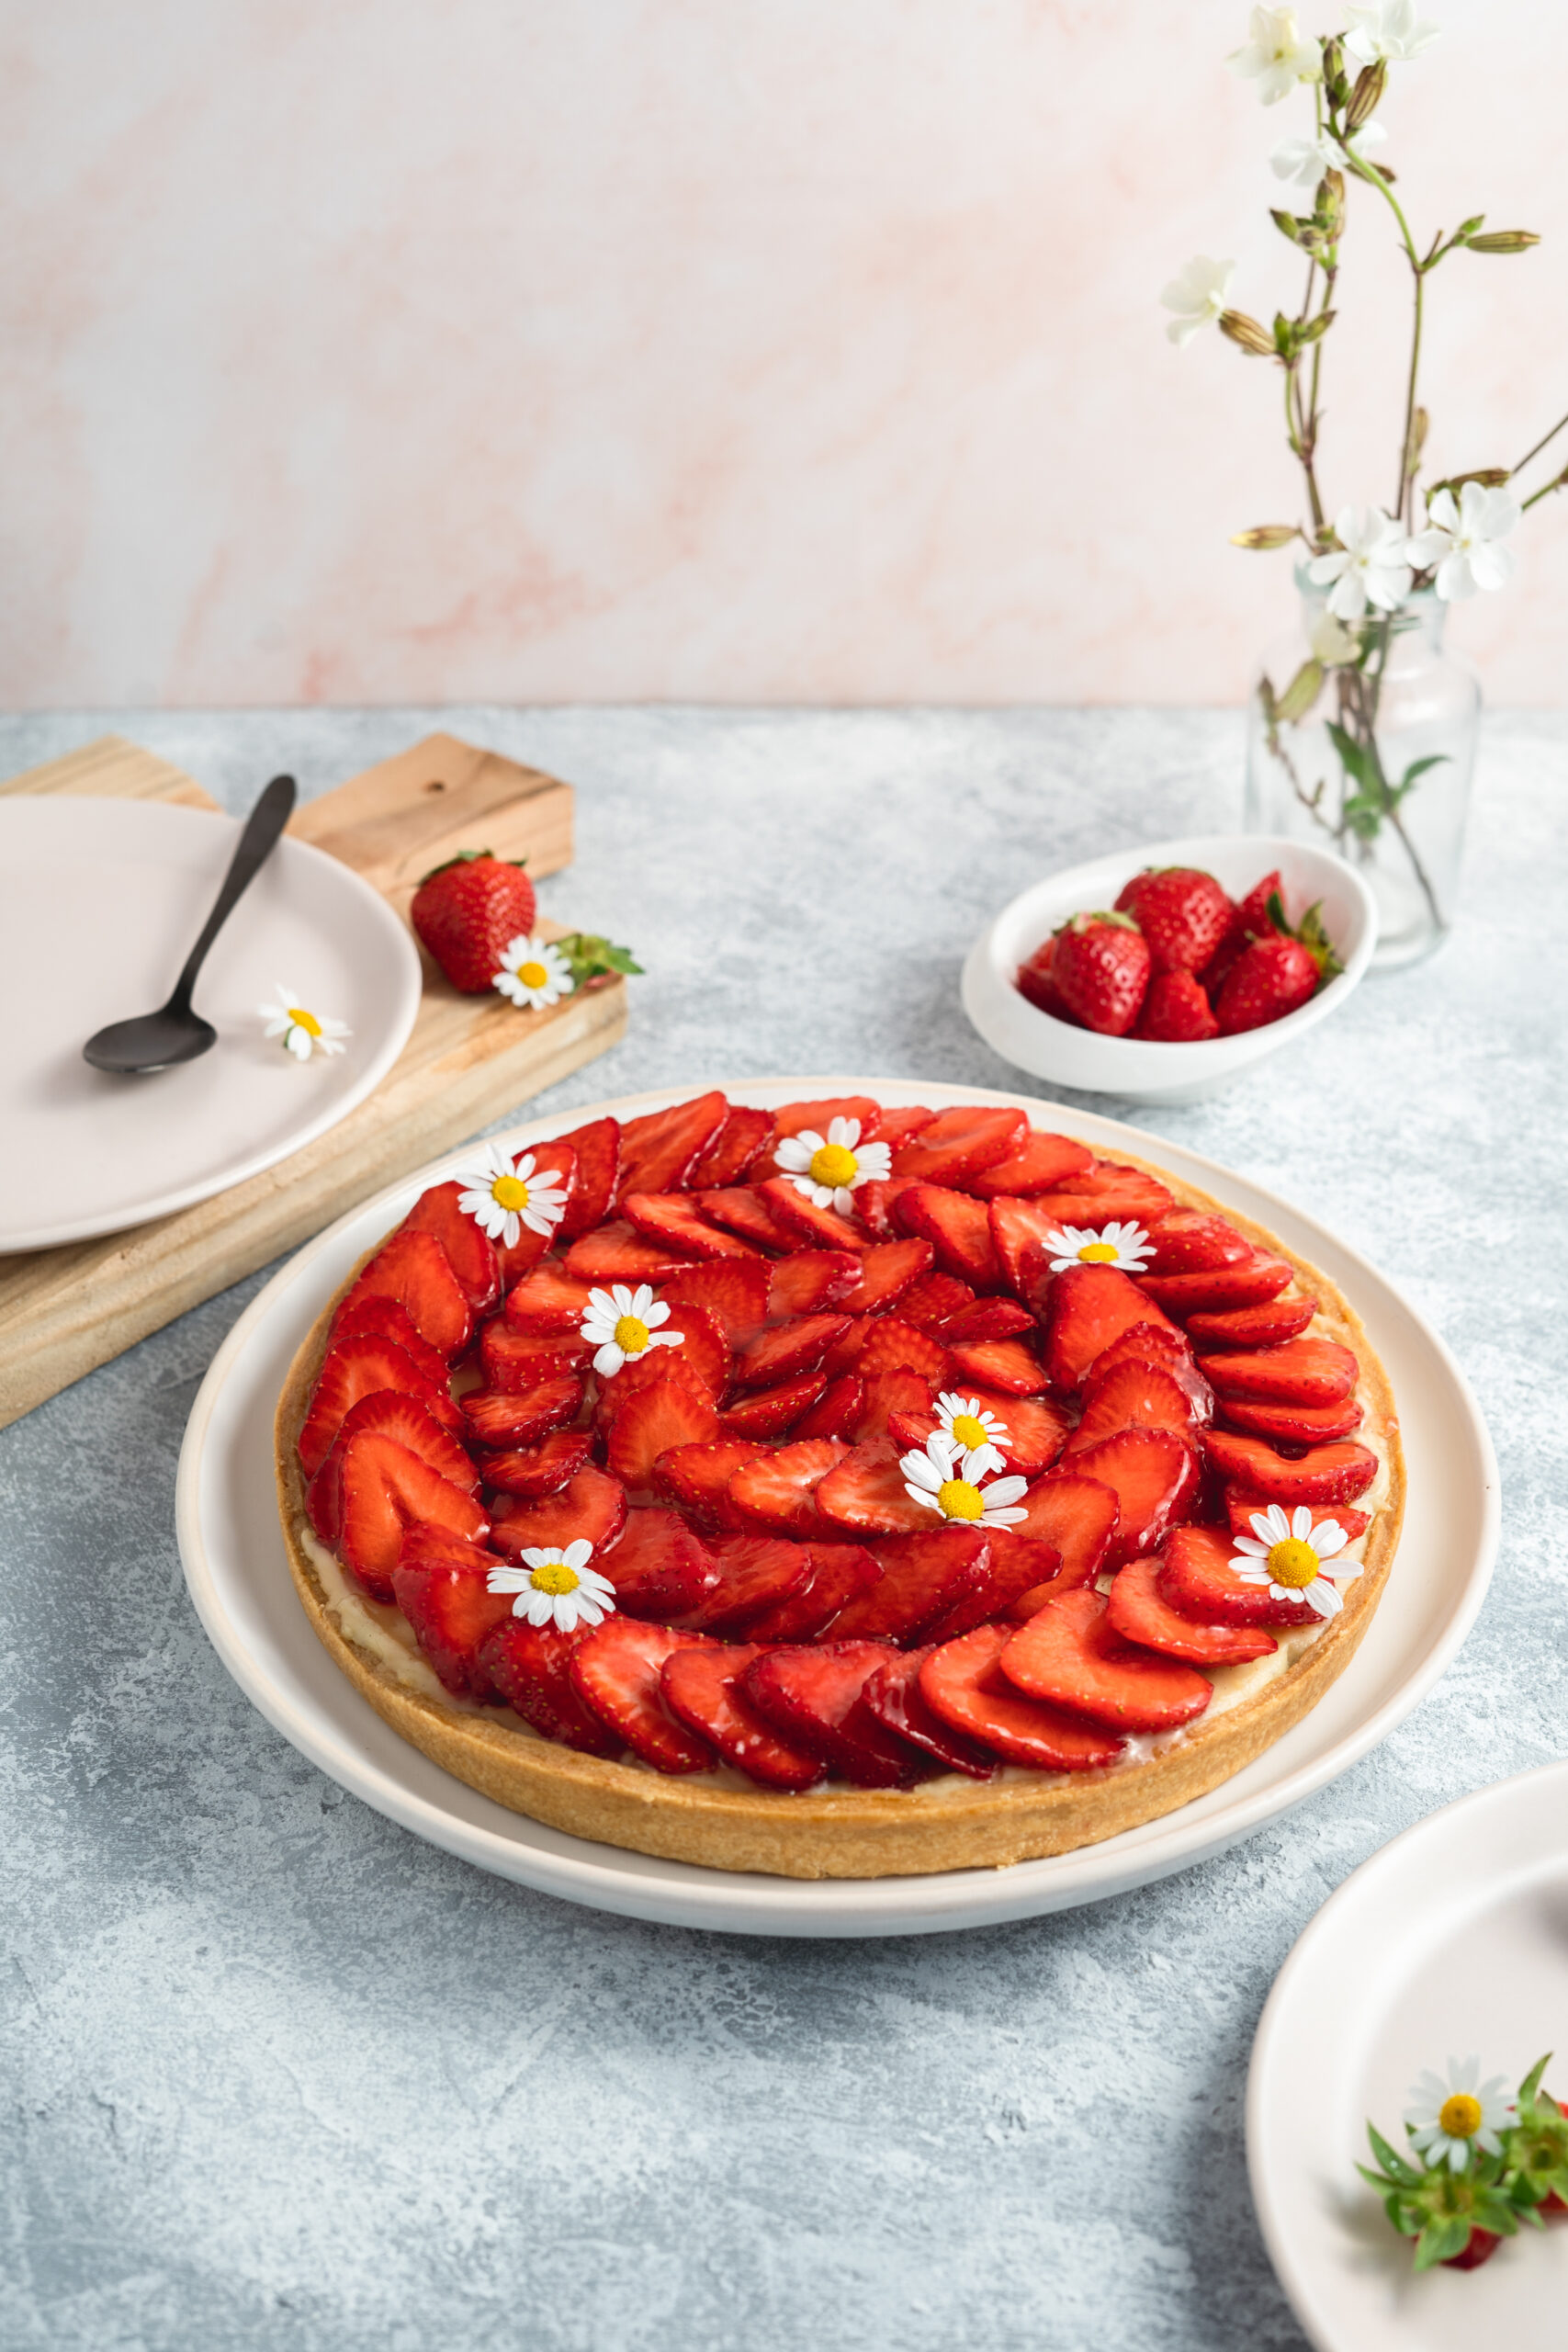 tarte fraise fruit dessert photographie culianire